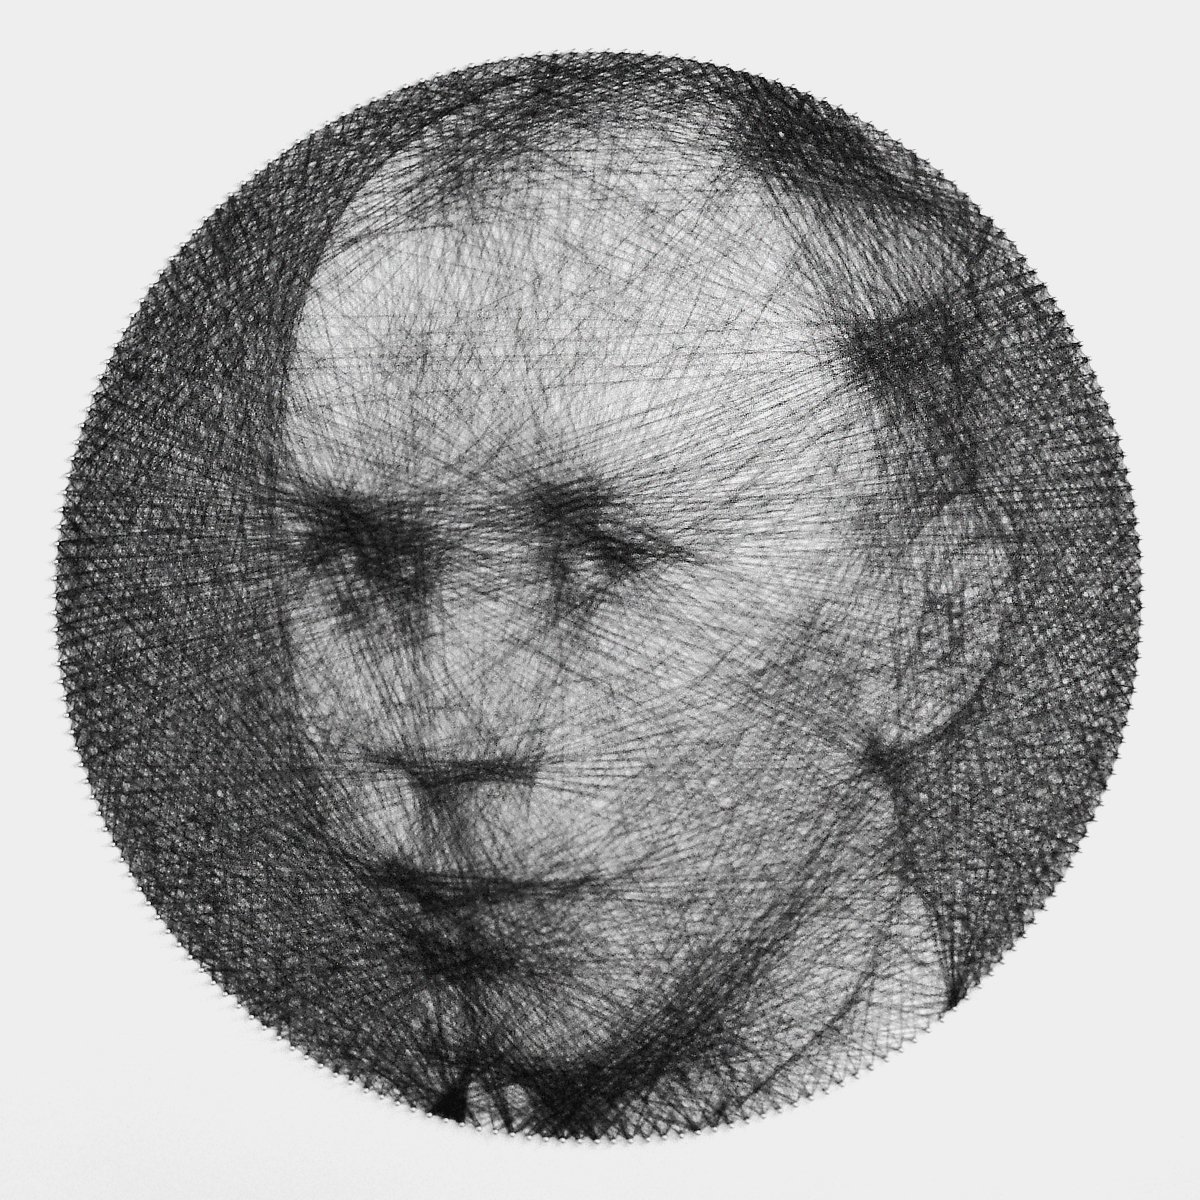 Sergei Prokofiev String Art Portrait by Andrey Saharov